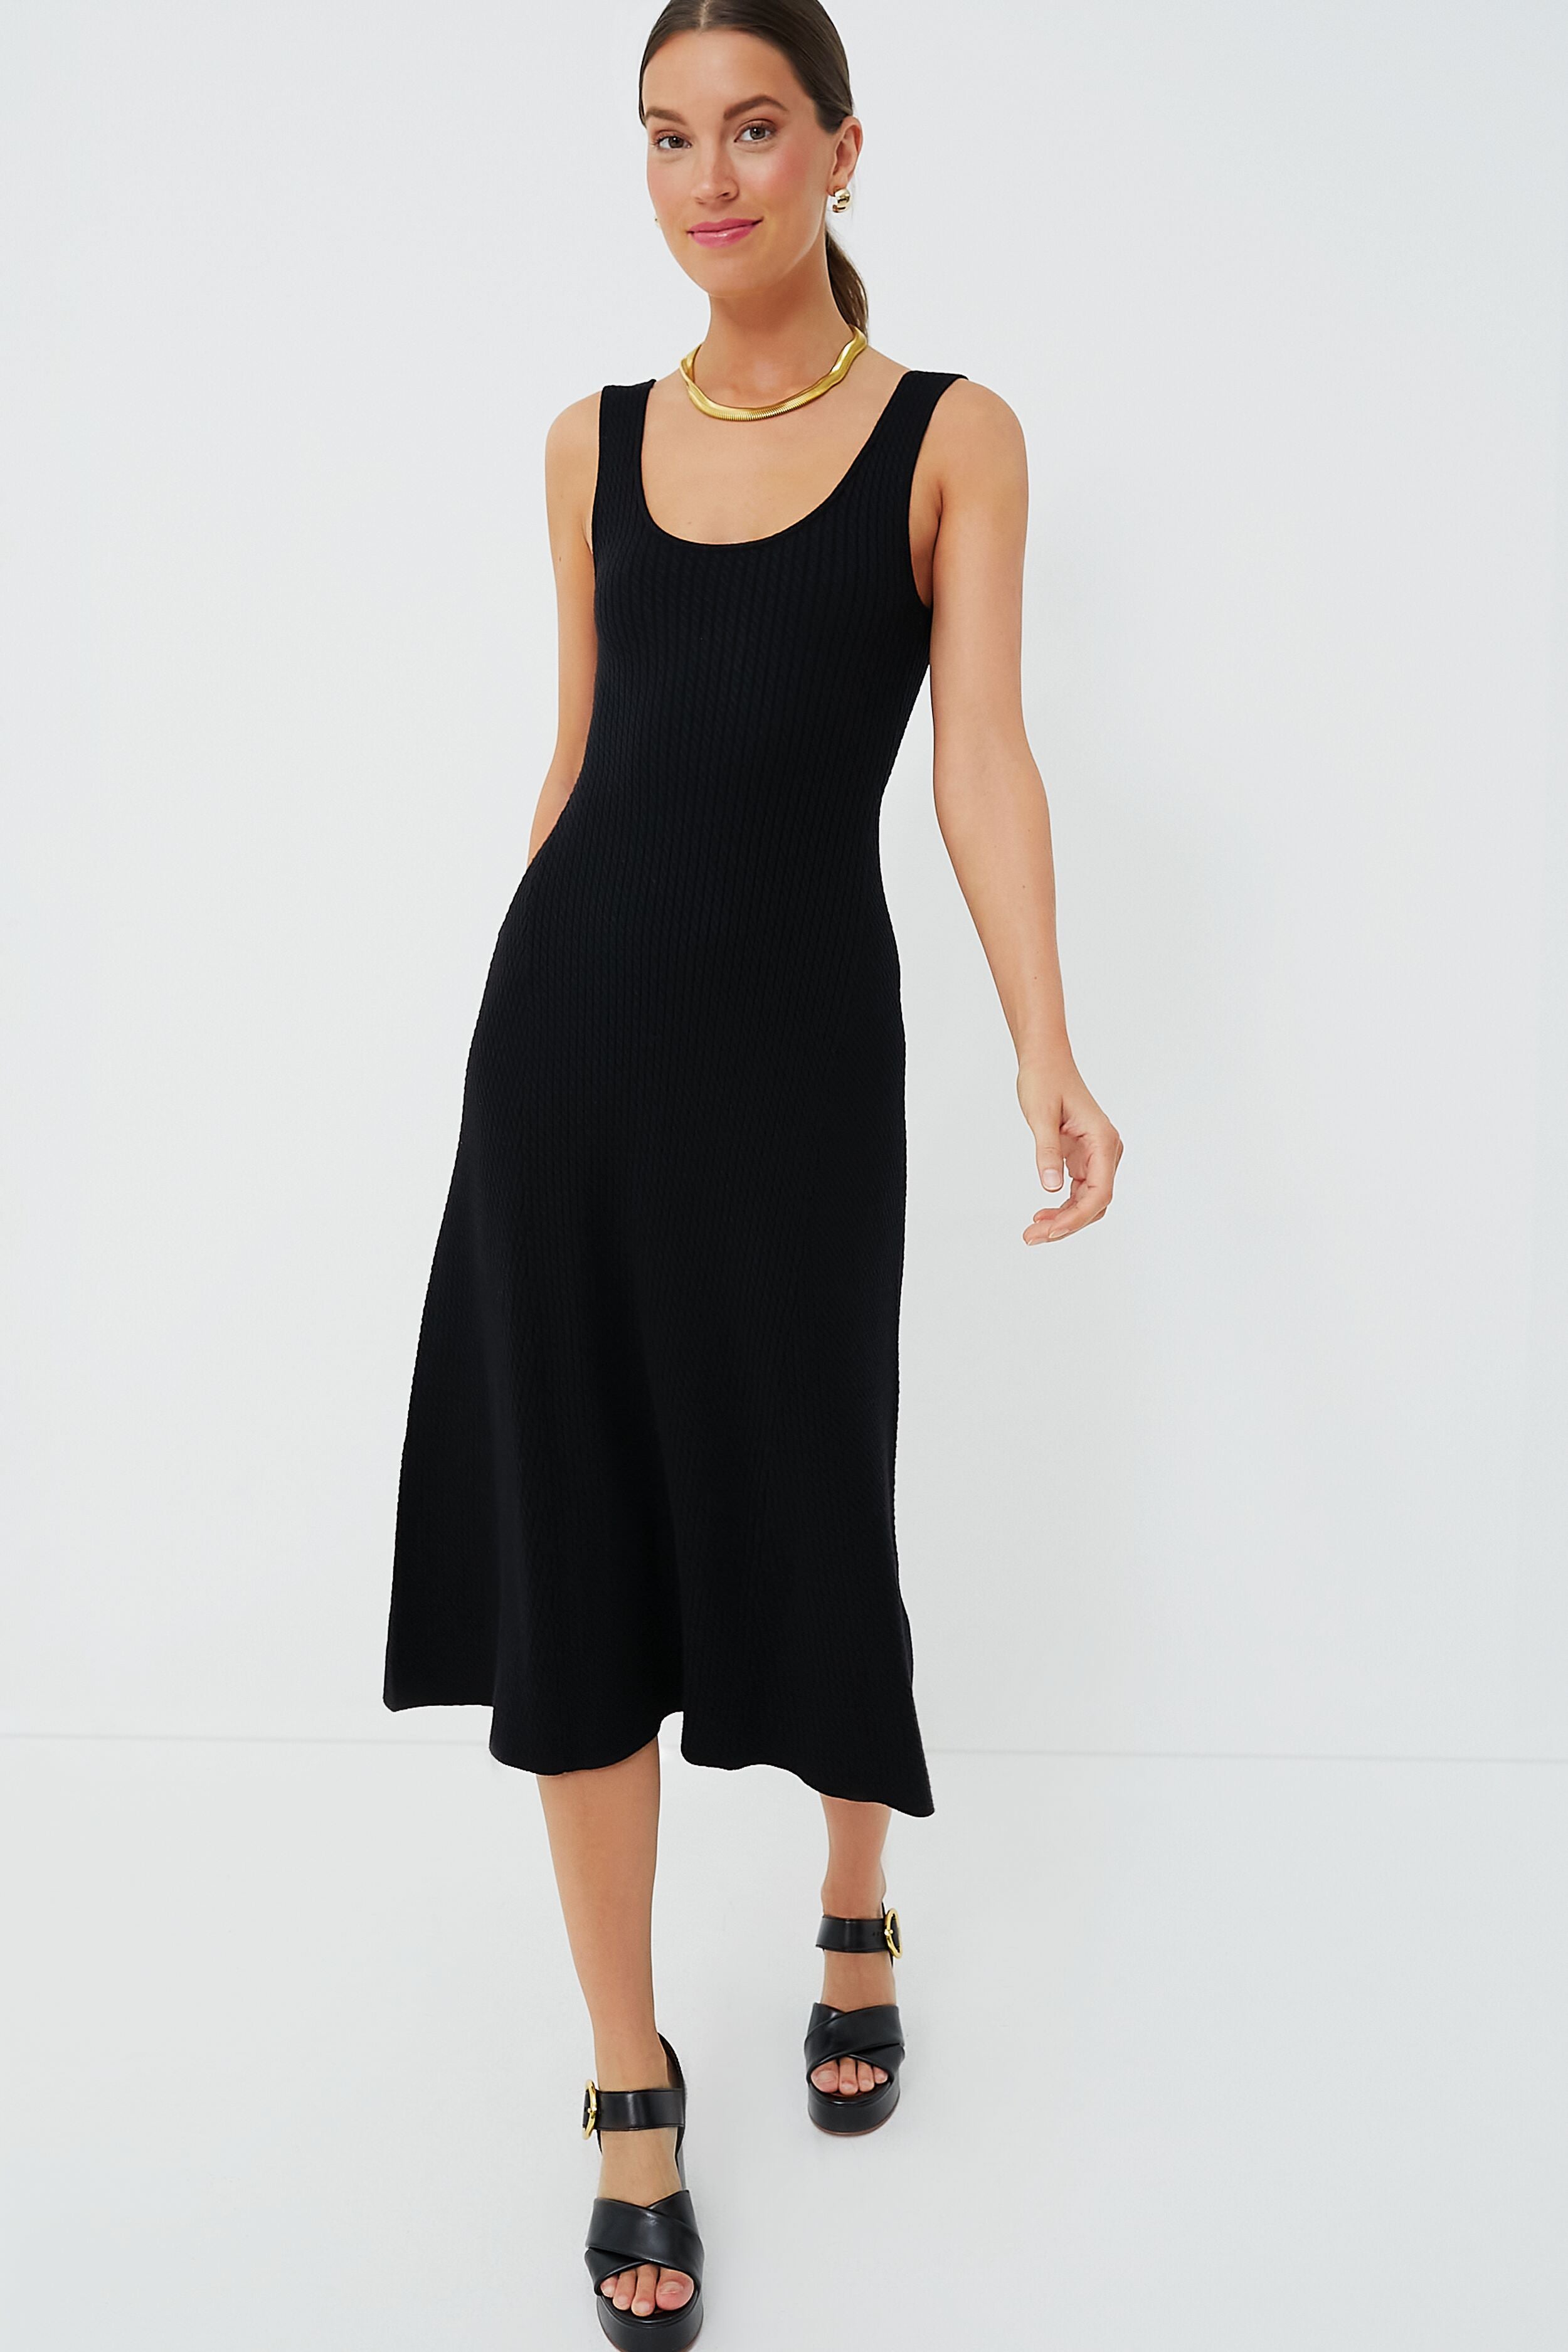 Black Scoop Sweater Midi Dress | WeWoreWhat